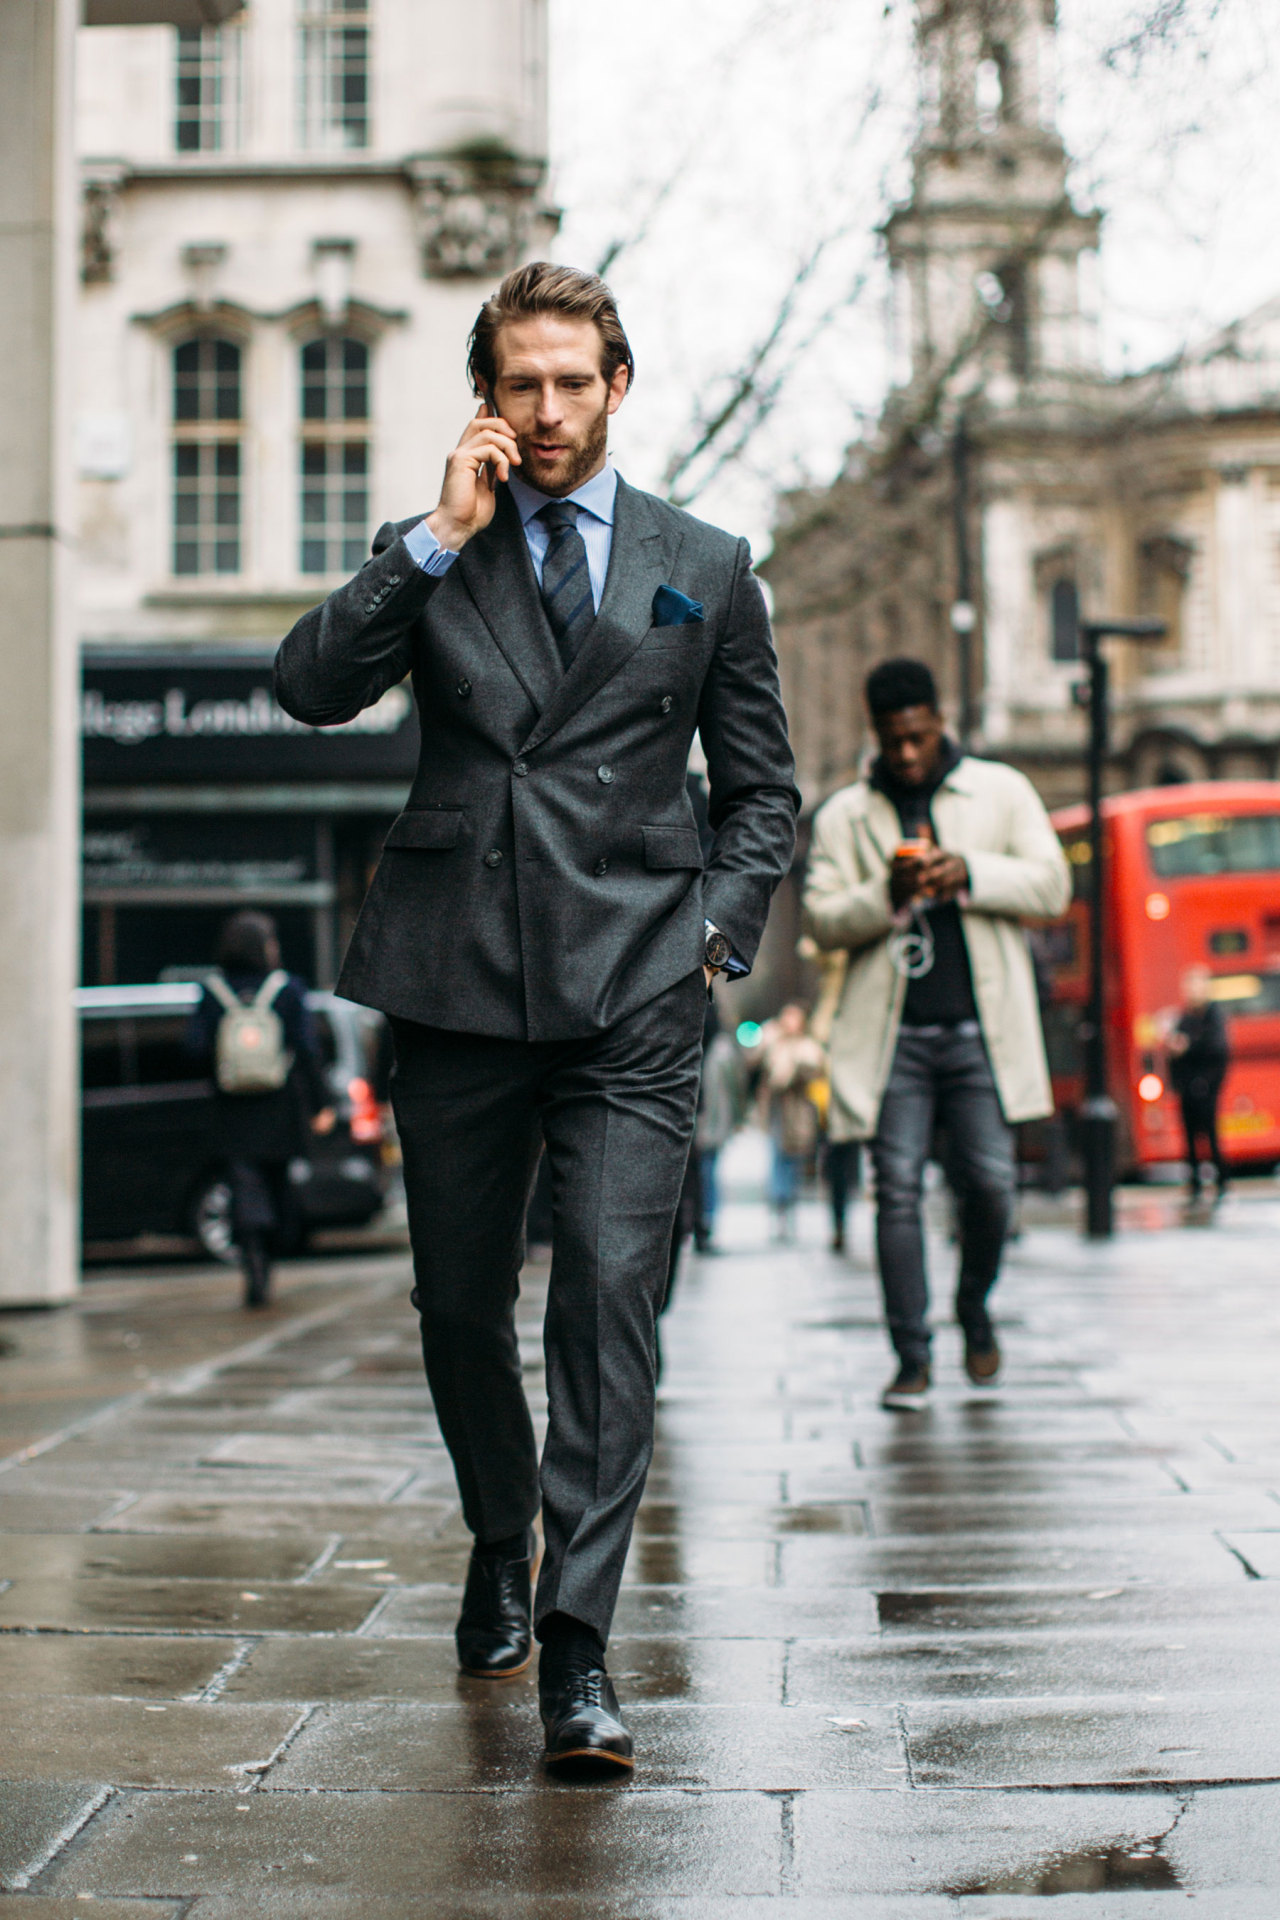 London Fashion Week Men’s 2017 Street Style #1 | Men's LifeStyle Blog